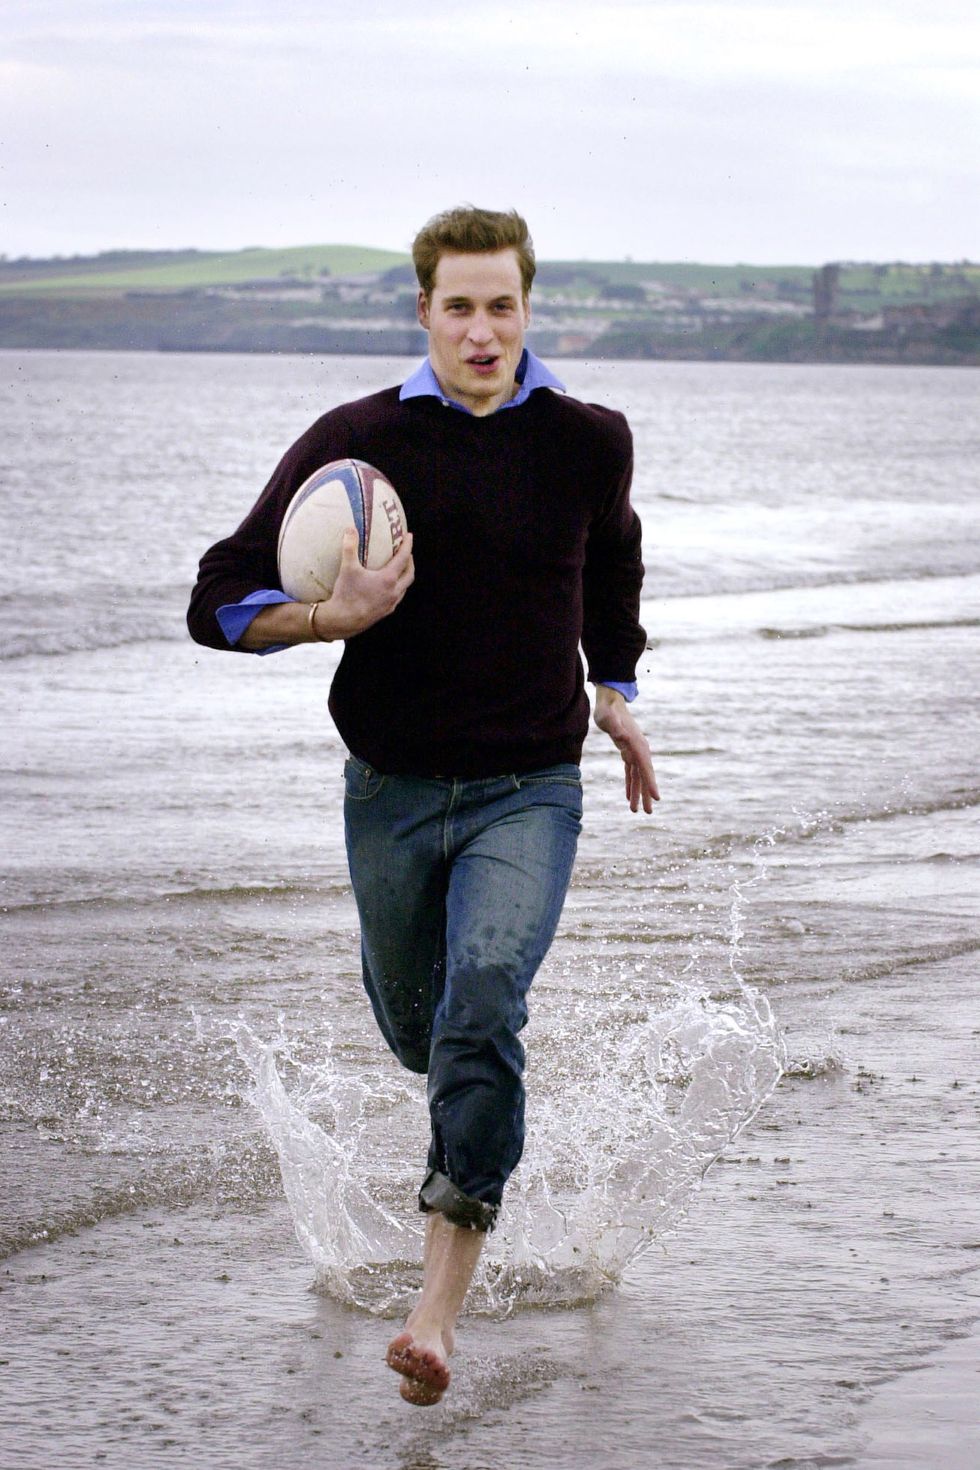 william beach rugby ball